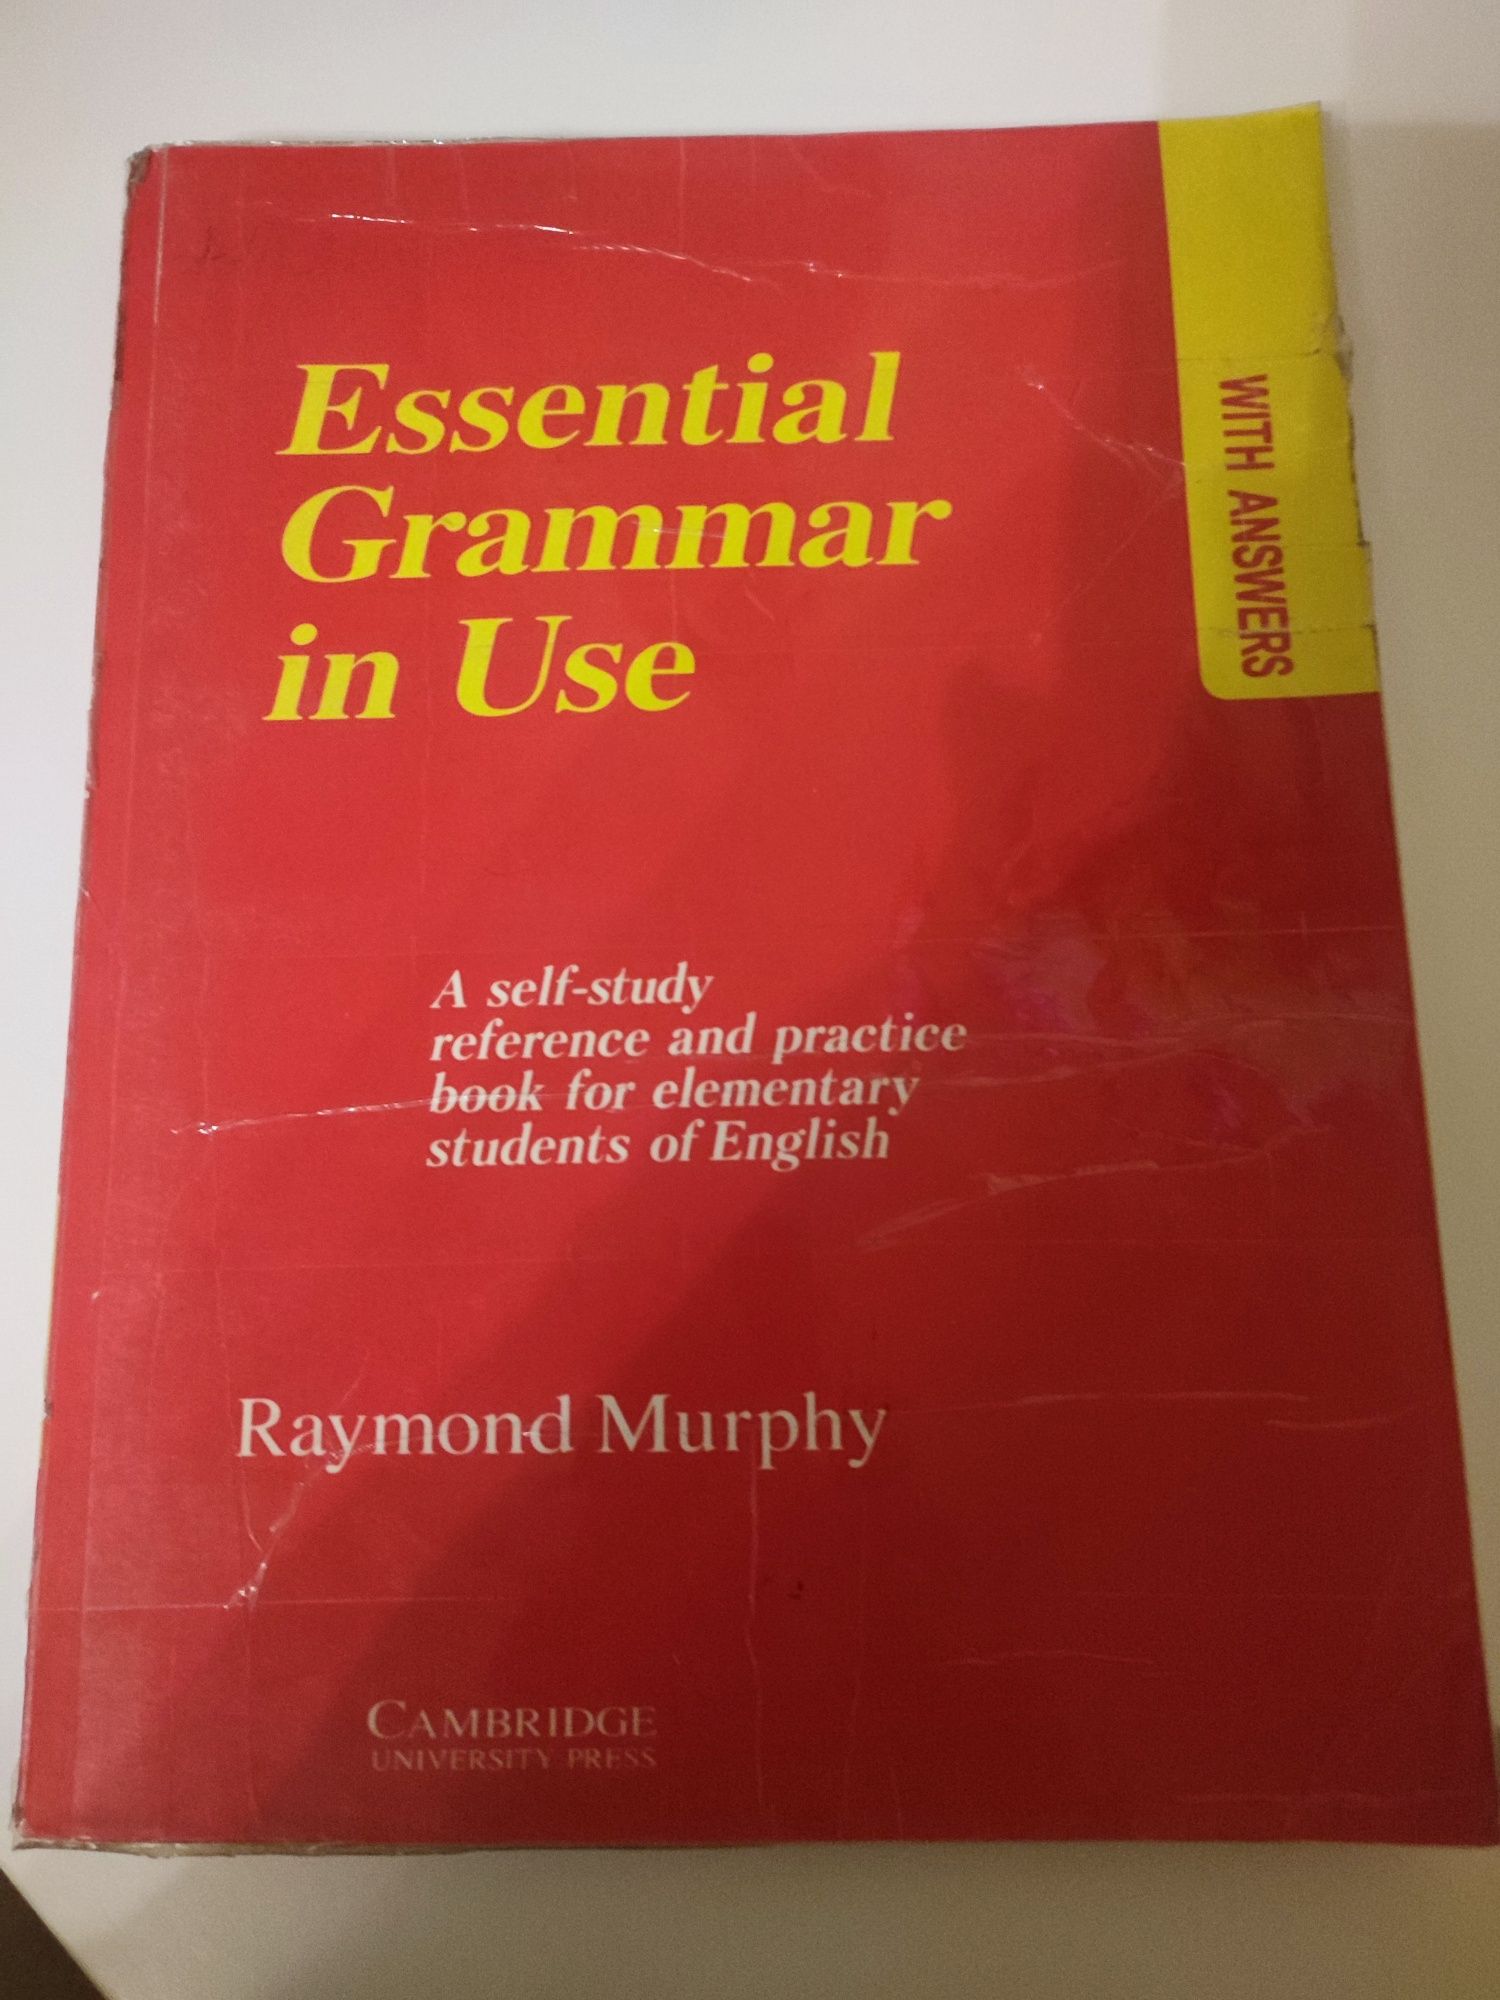 Граматика Essential Grammar in Use
Essential Grammar in Use

Ess